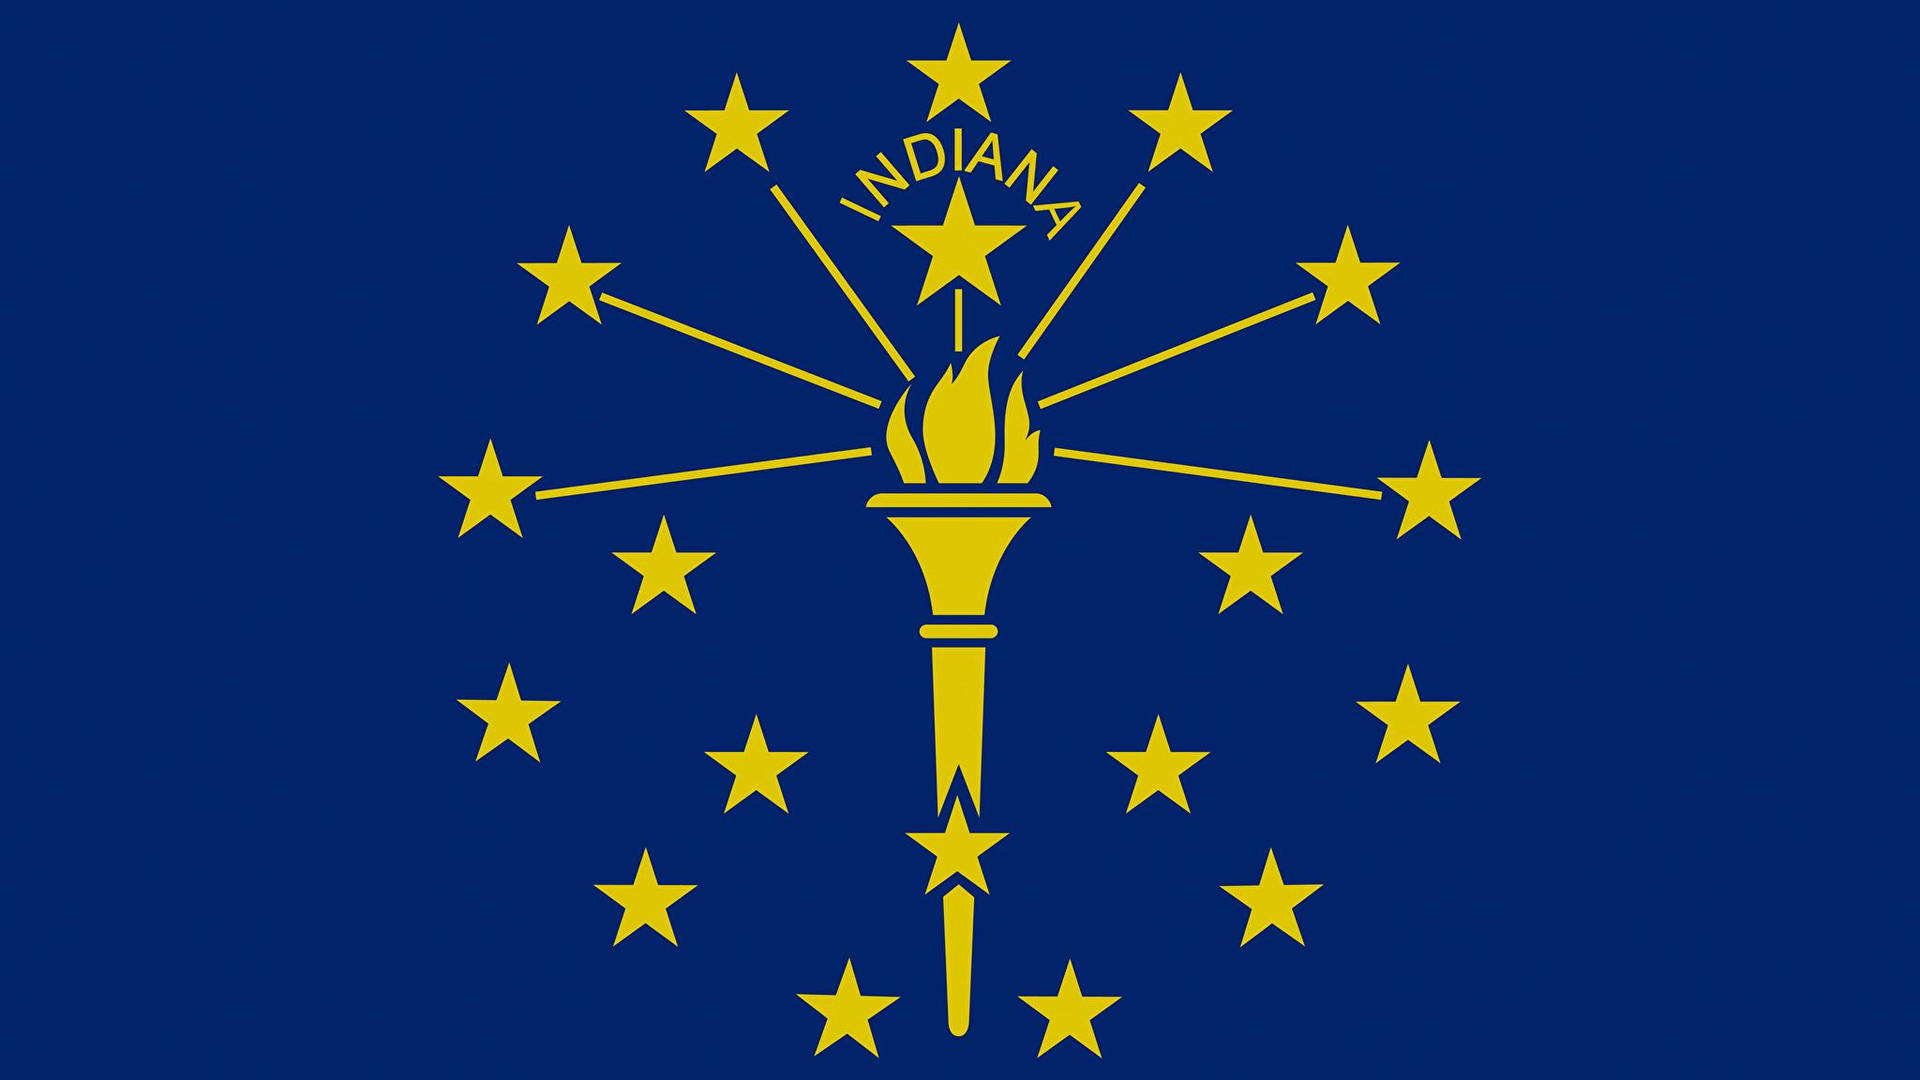 Indianaflaggan Inzoomad Wallpaper